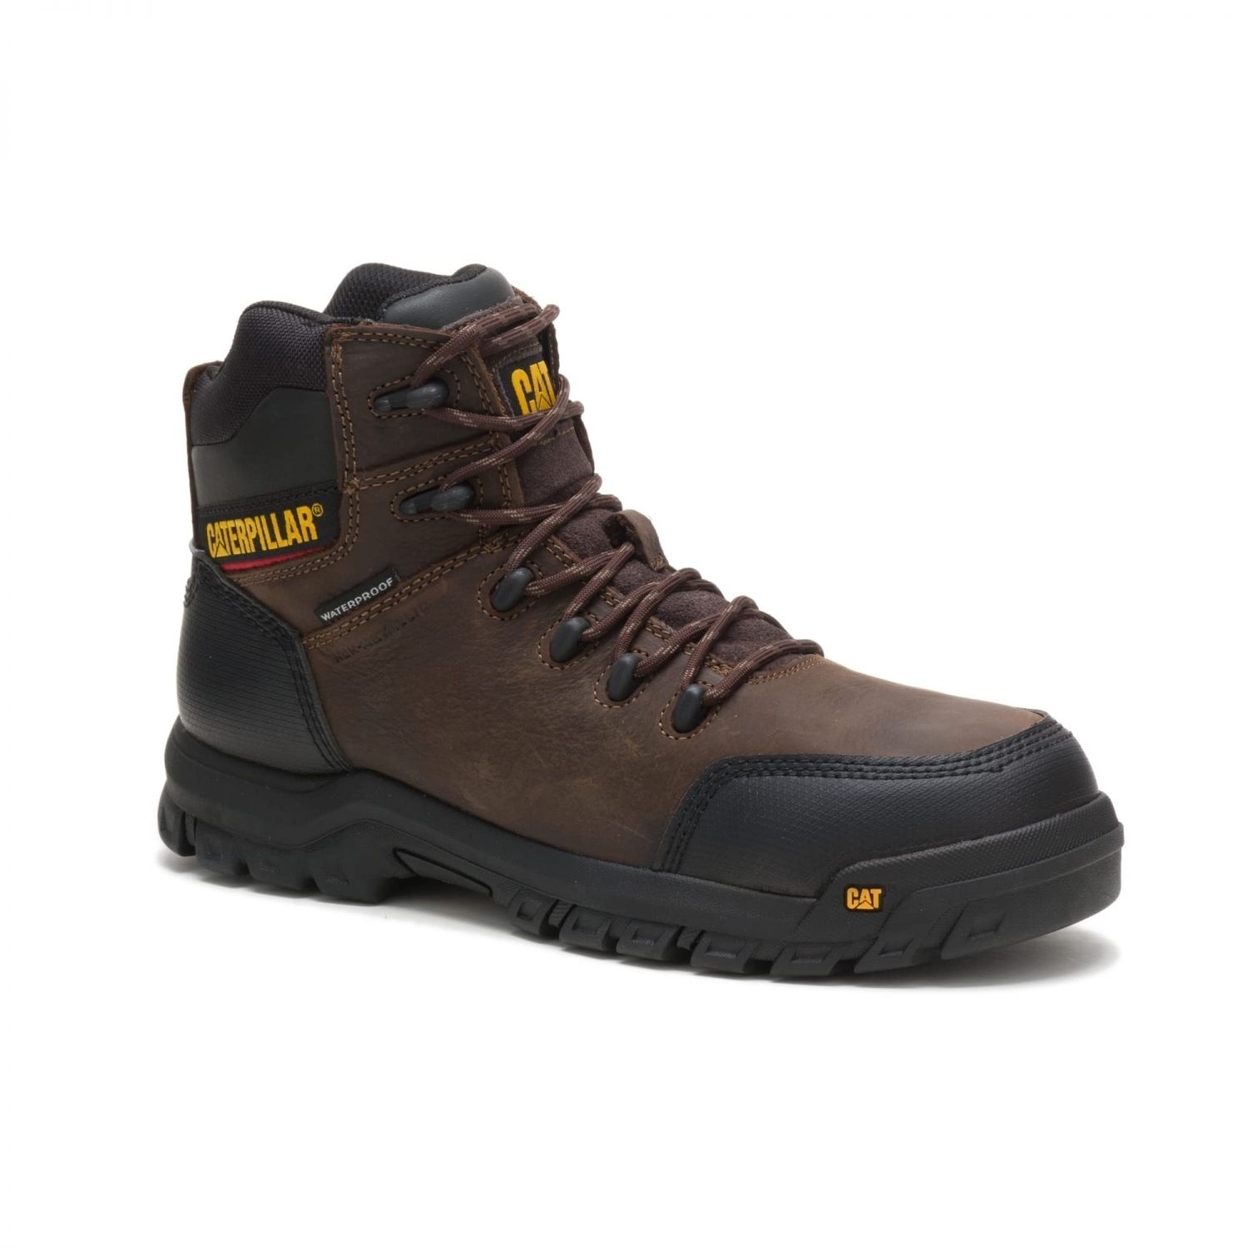 Cat Footwear Men's Resorption Composite Toe Waterproof Industrial Boot BLACK - BLACK, 7-W